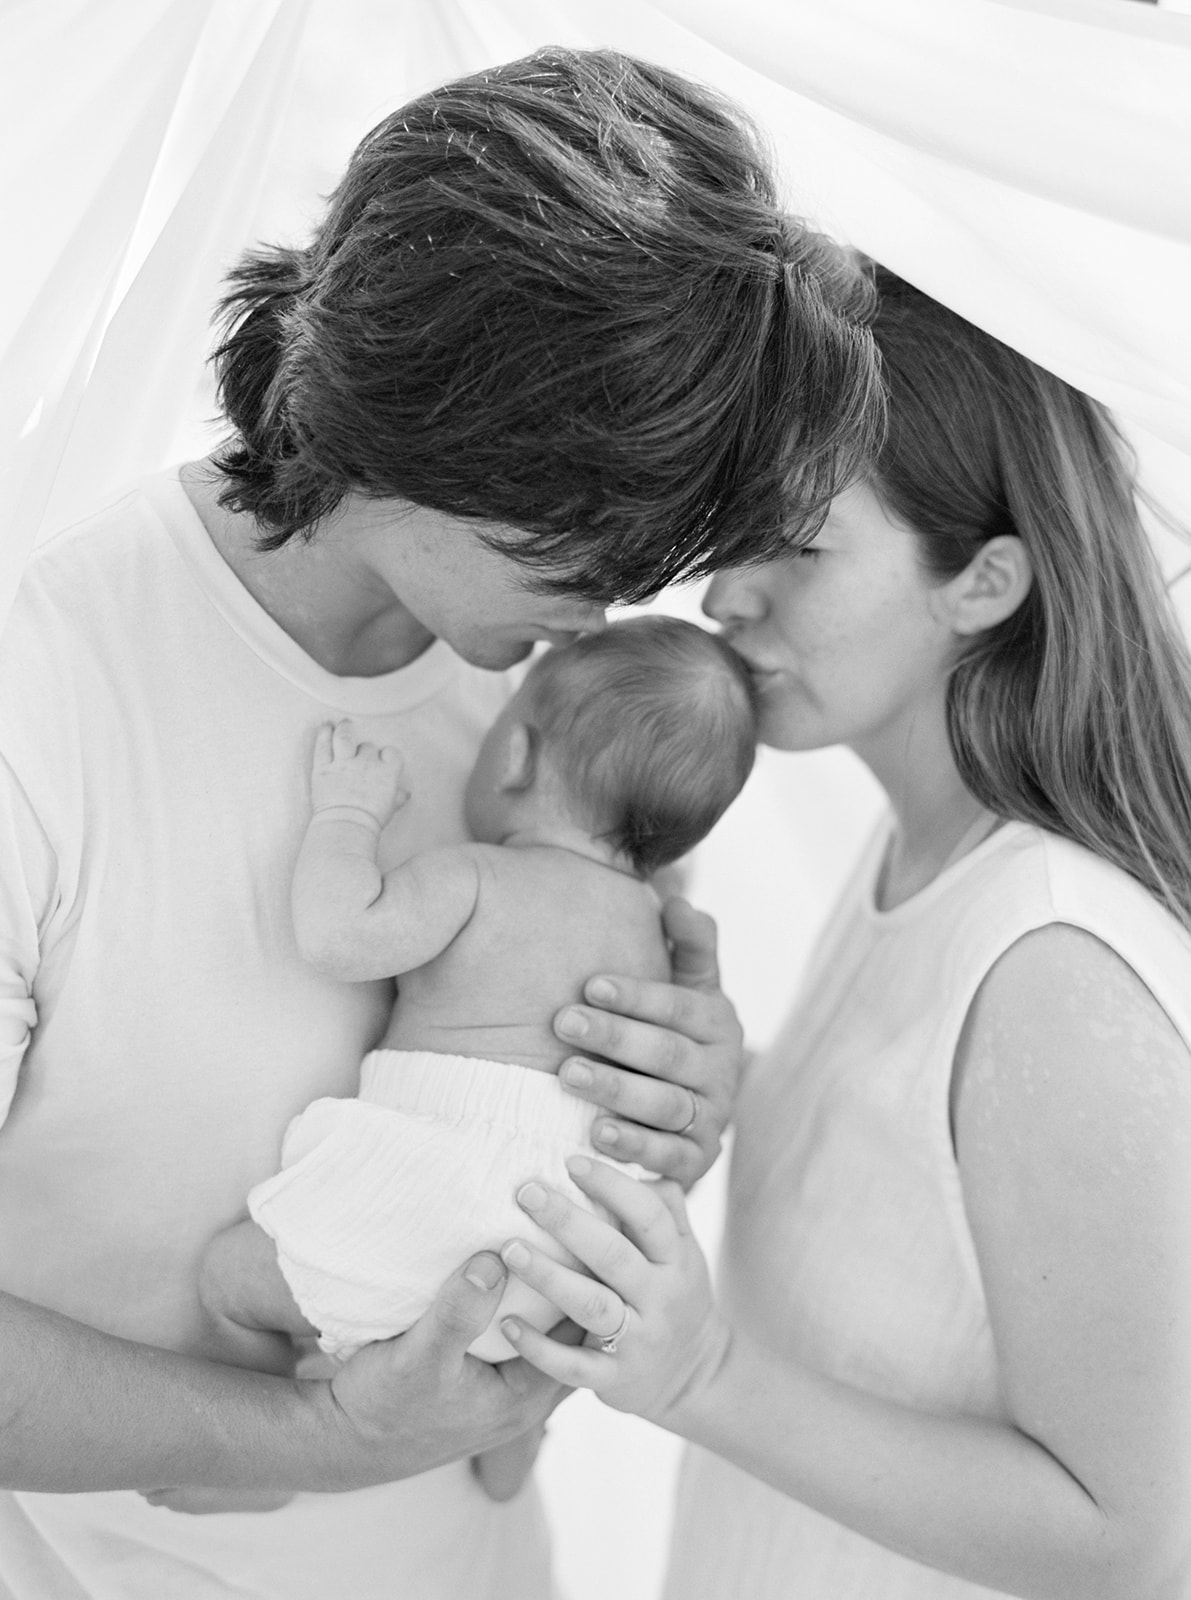 Black and white organic newborn portrait with mom and dad kissing newborn baby boy.